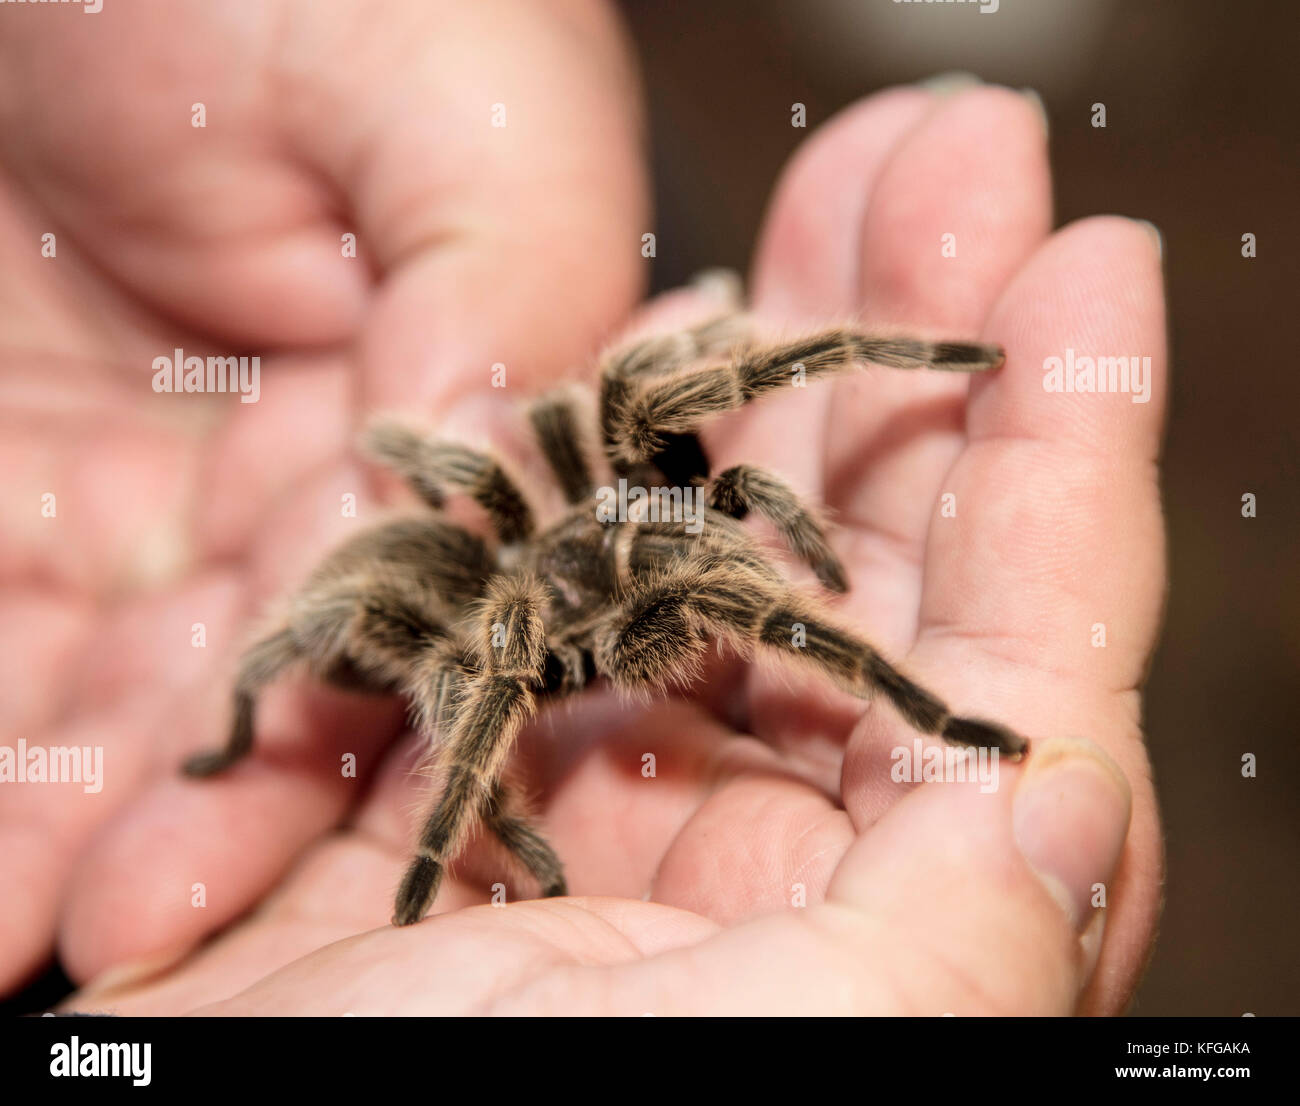 Tarantula spider on a man's hand Stock Photo